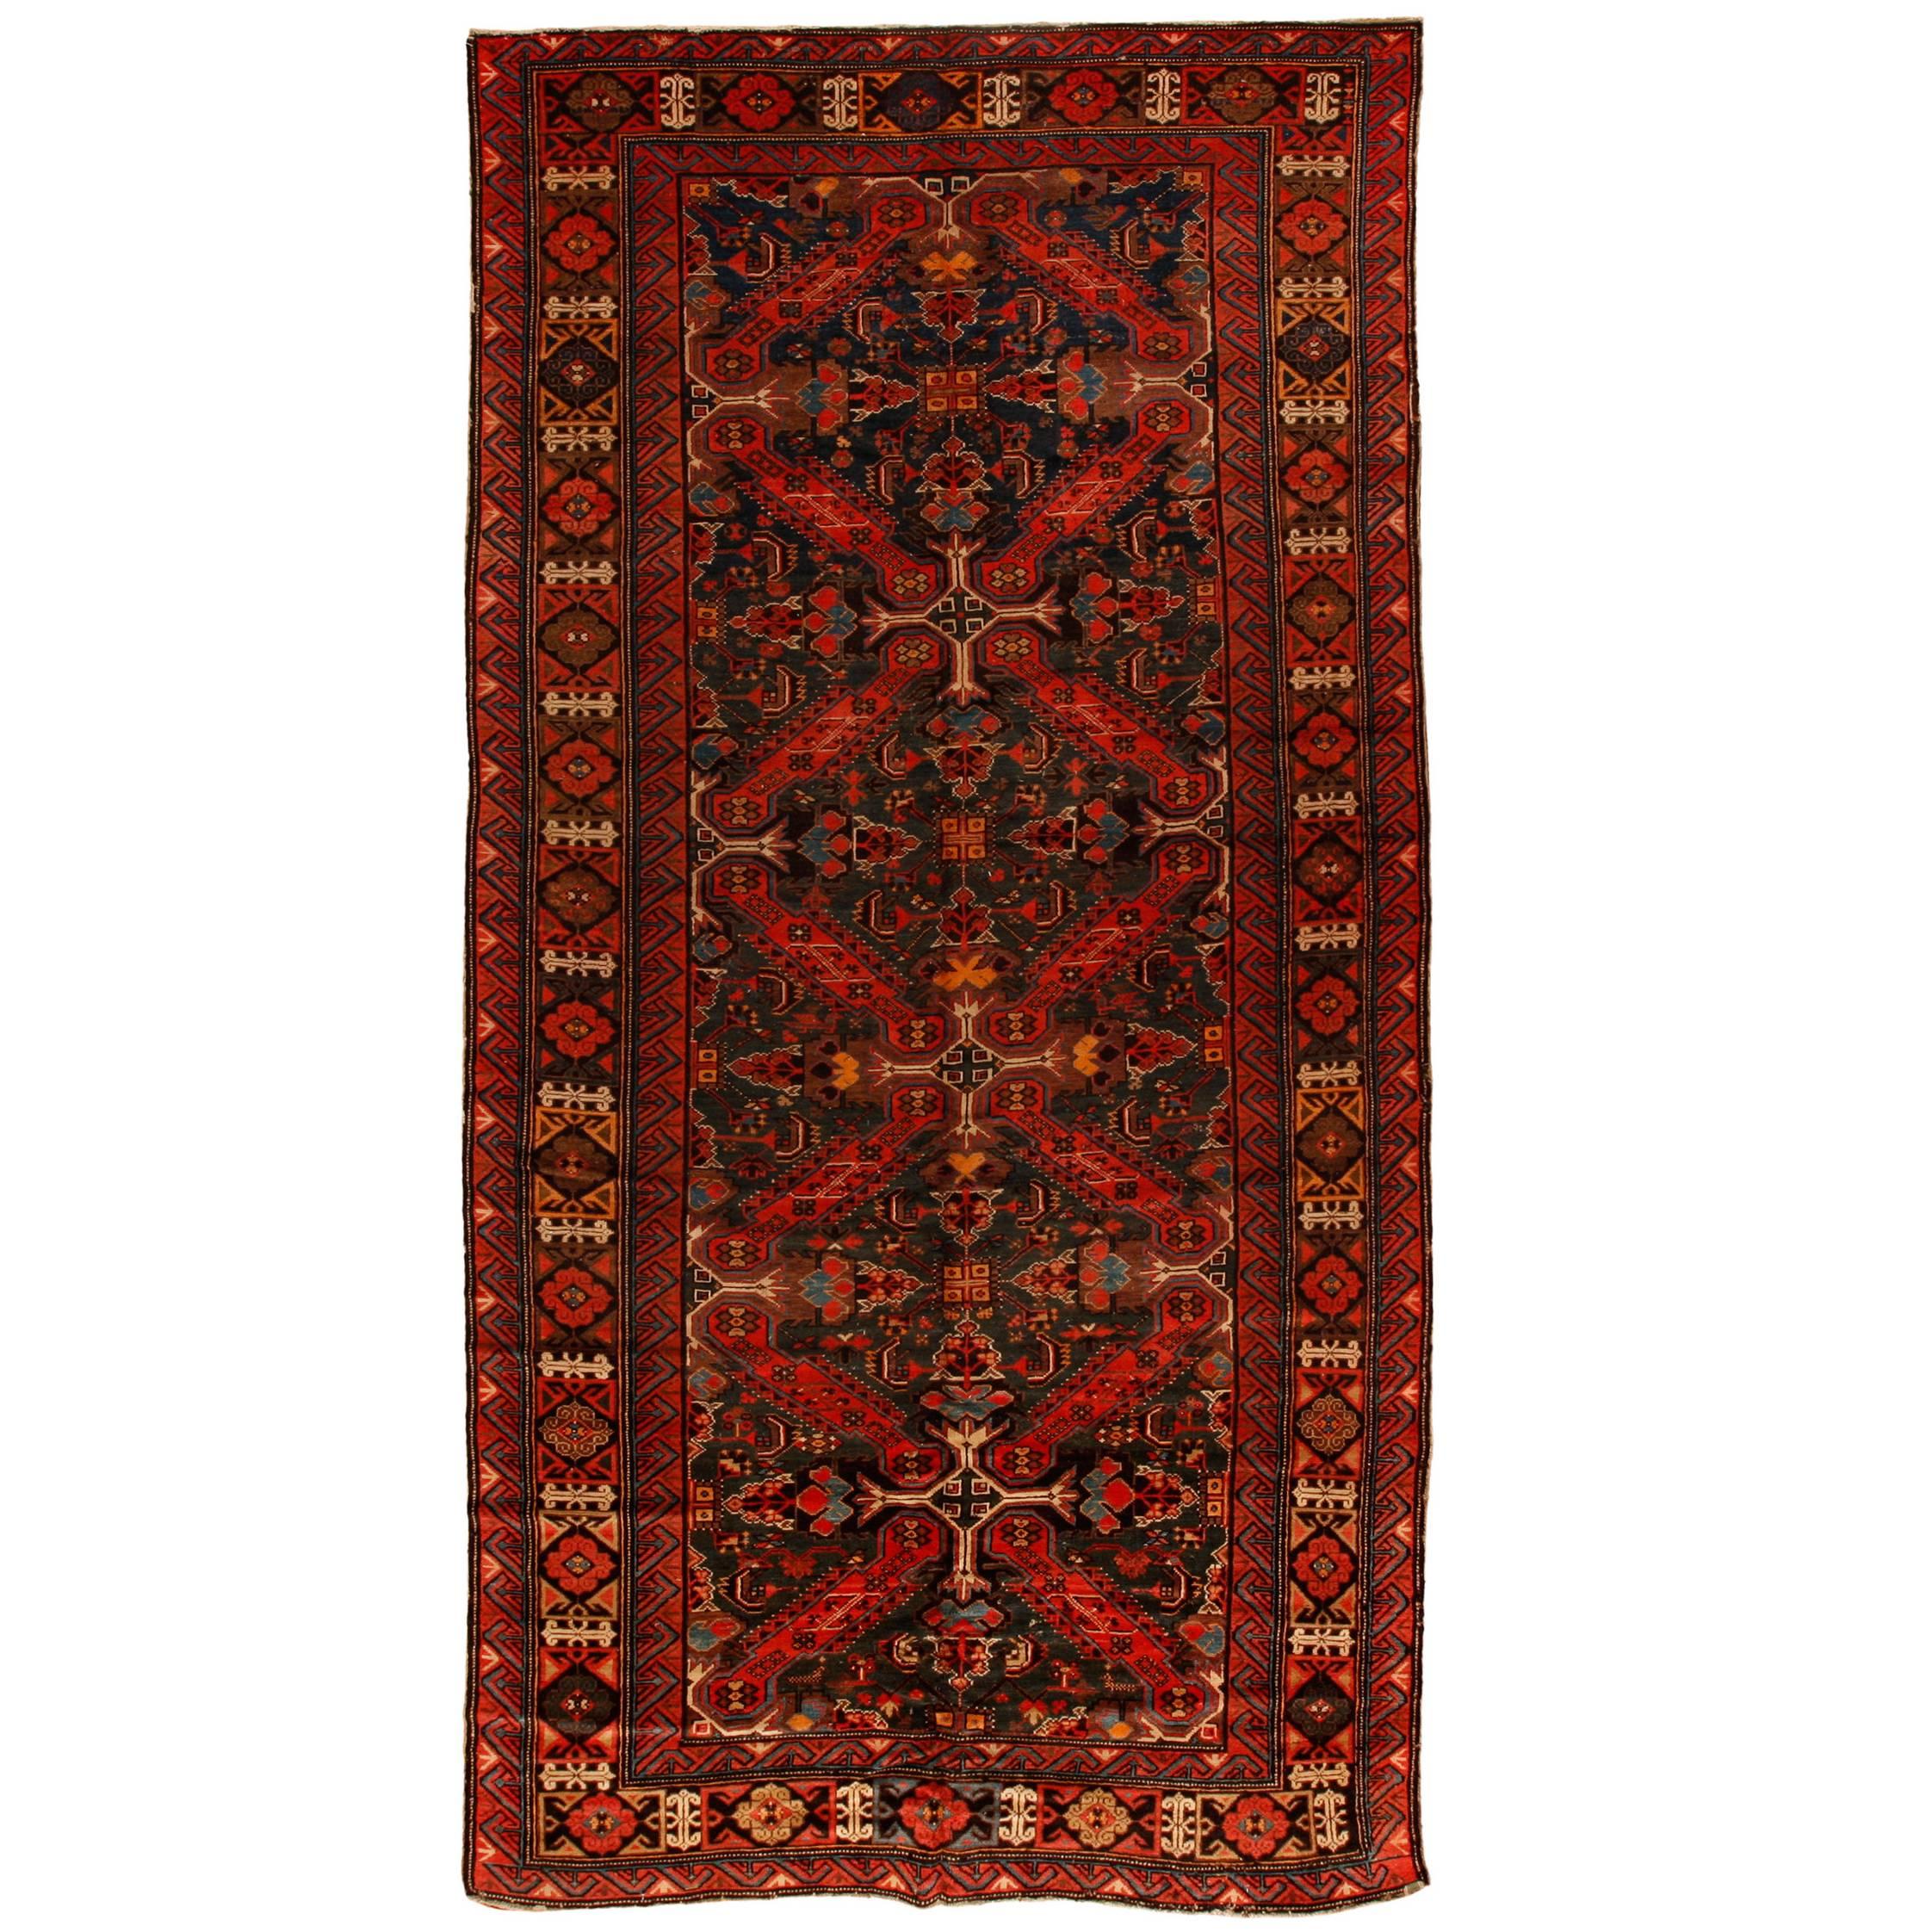 Antique Early 20th Century Caucasian Seychor Carpet For Sale